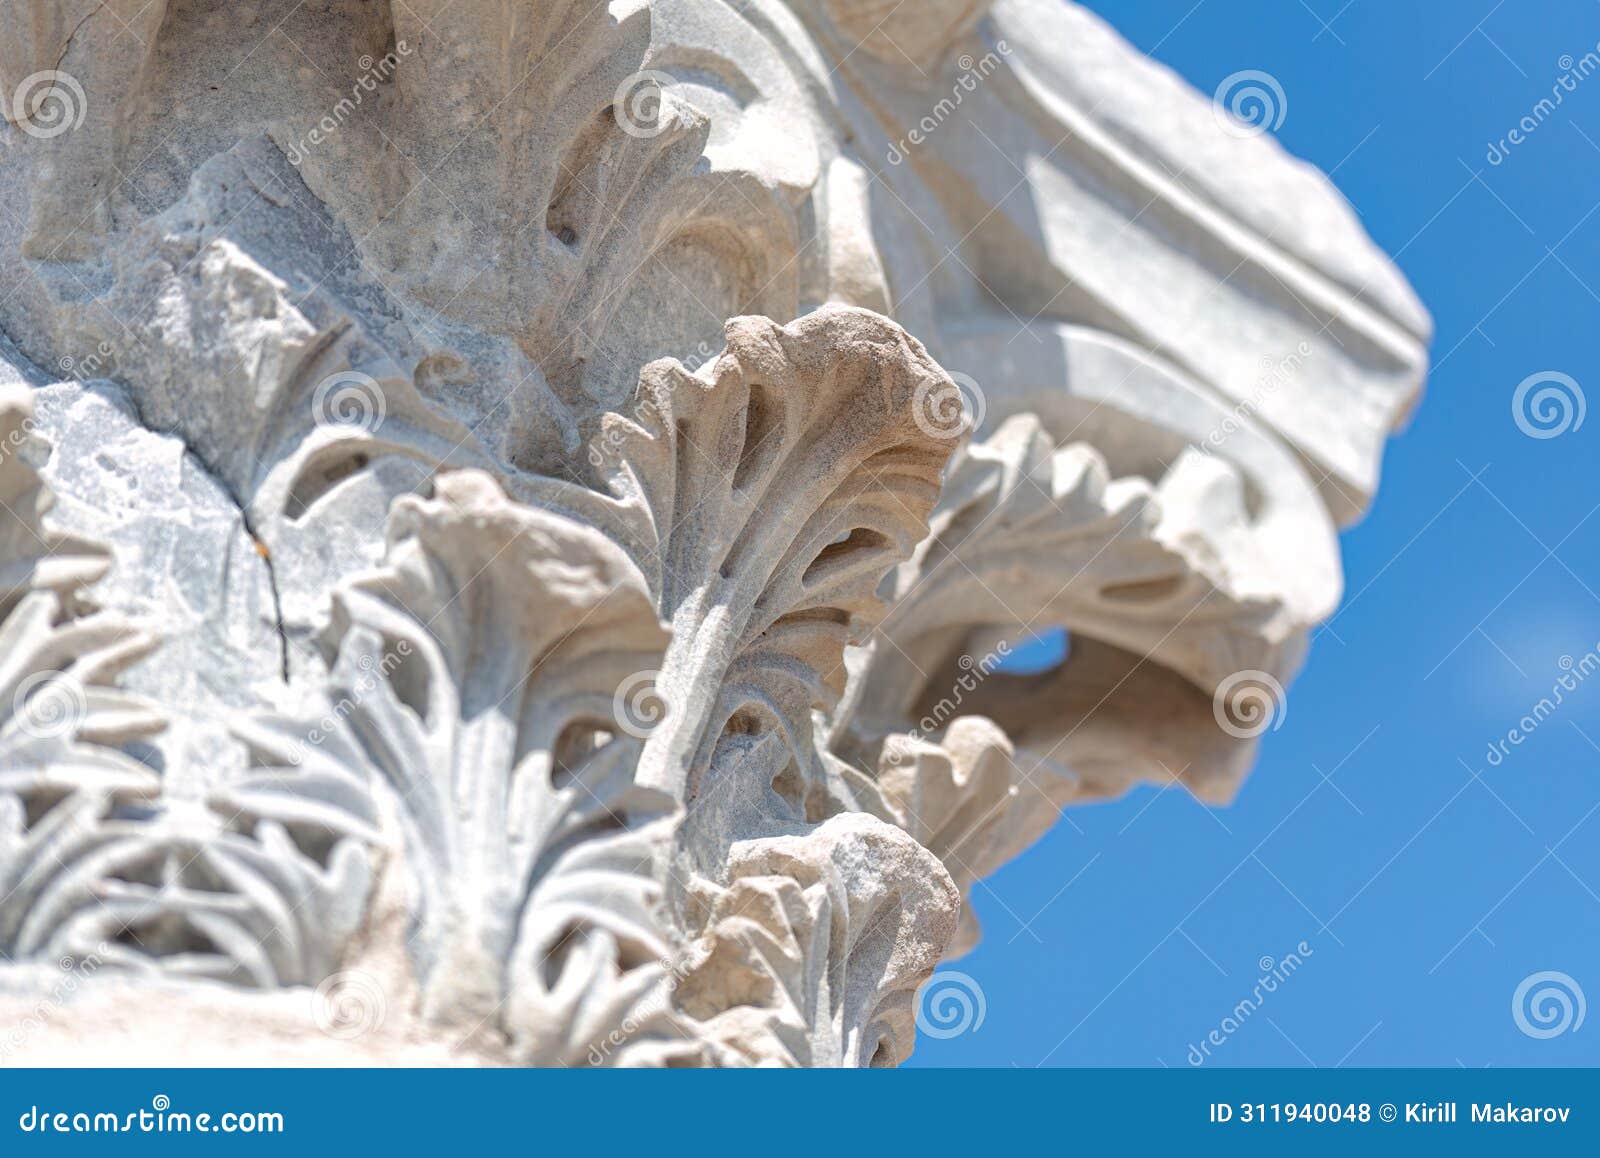 close-up details of ancient column at kourion archaeological site. limassol district, cyprus